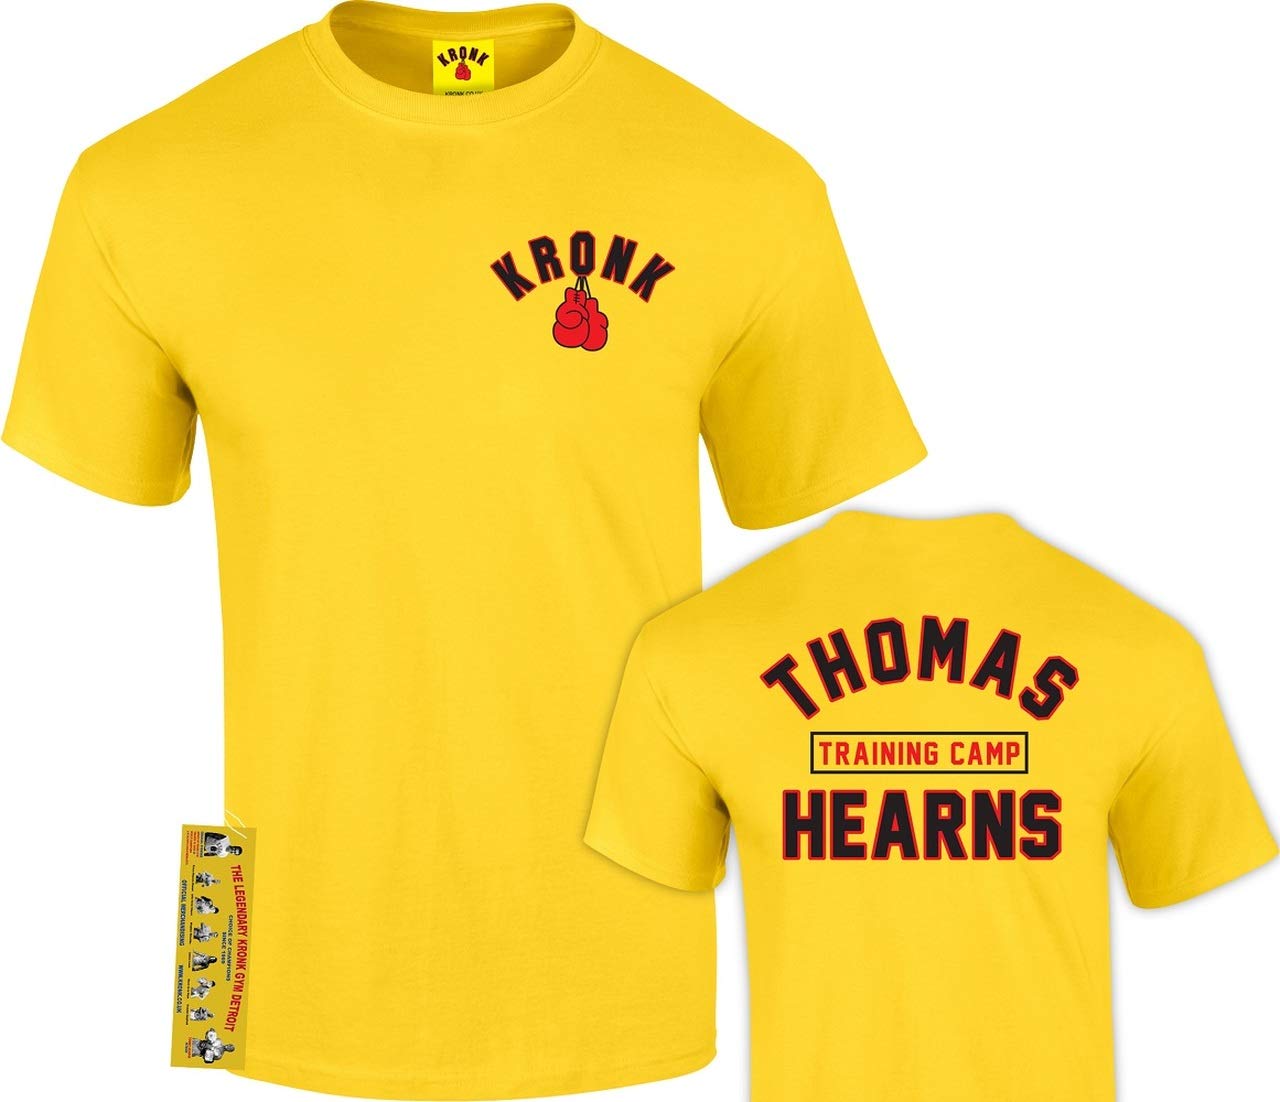 Kronk Thomas Hearns Training Camp Men's T Shirt Regular Fit